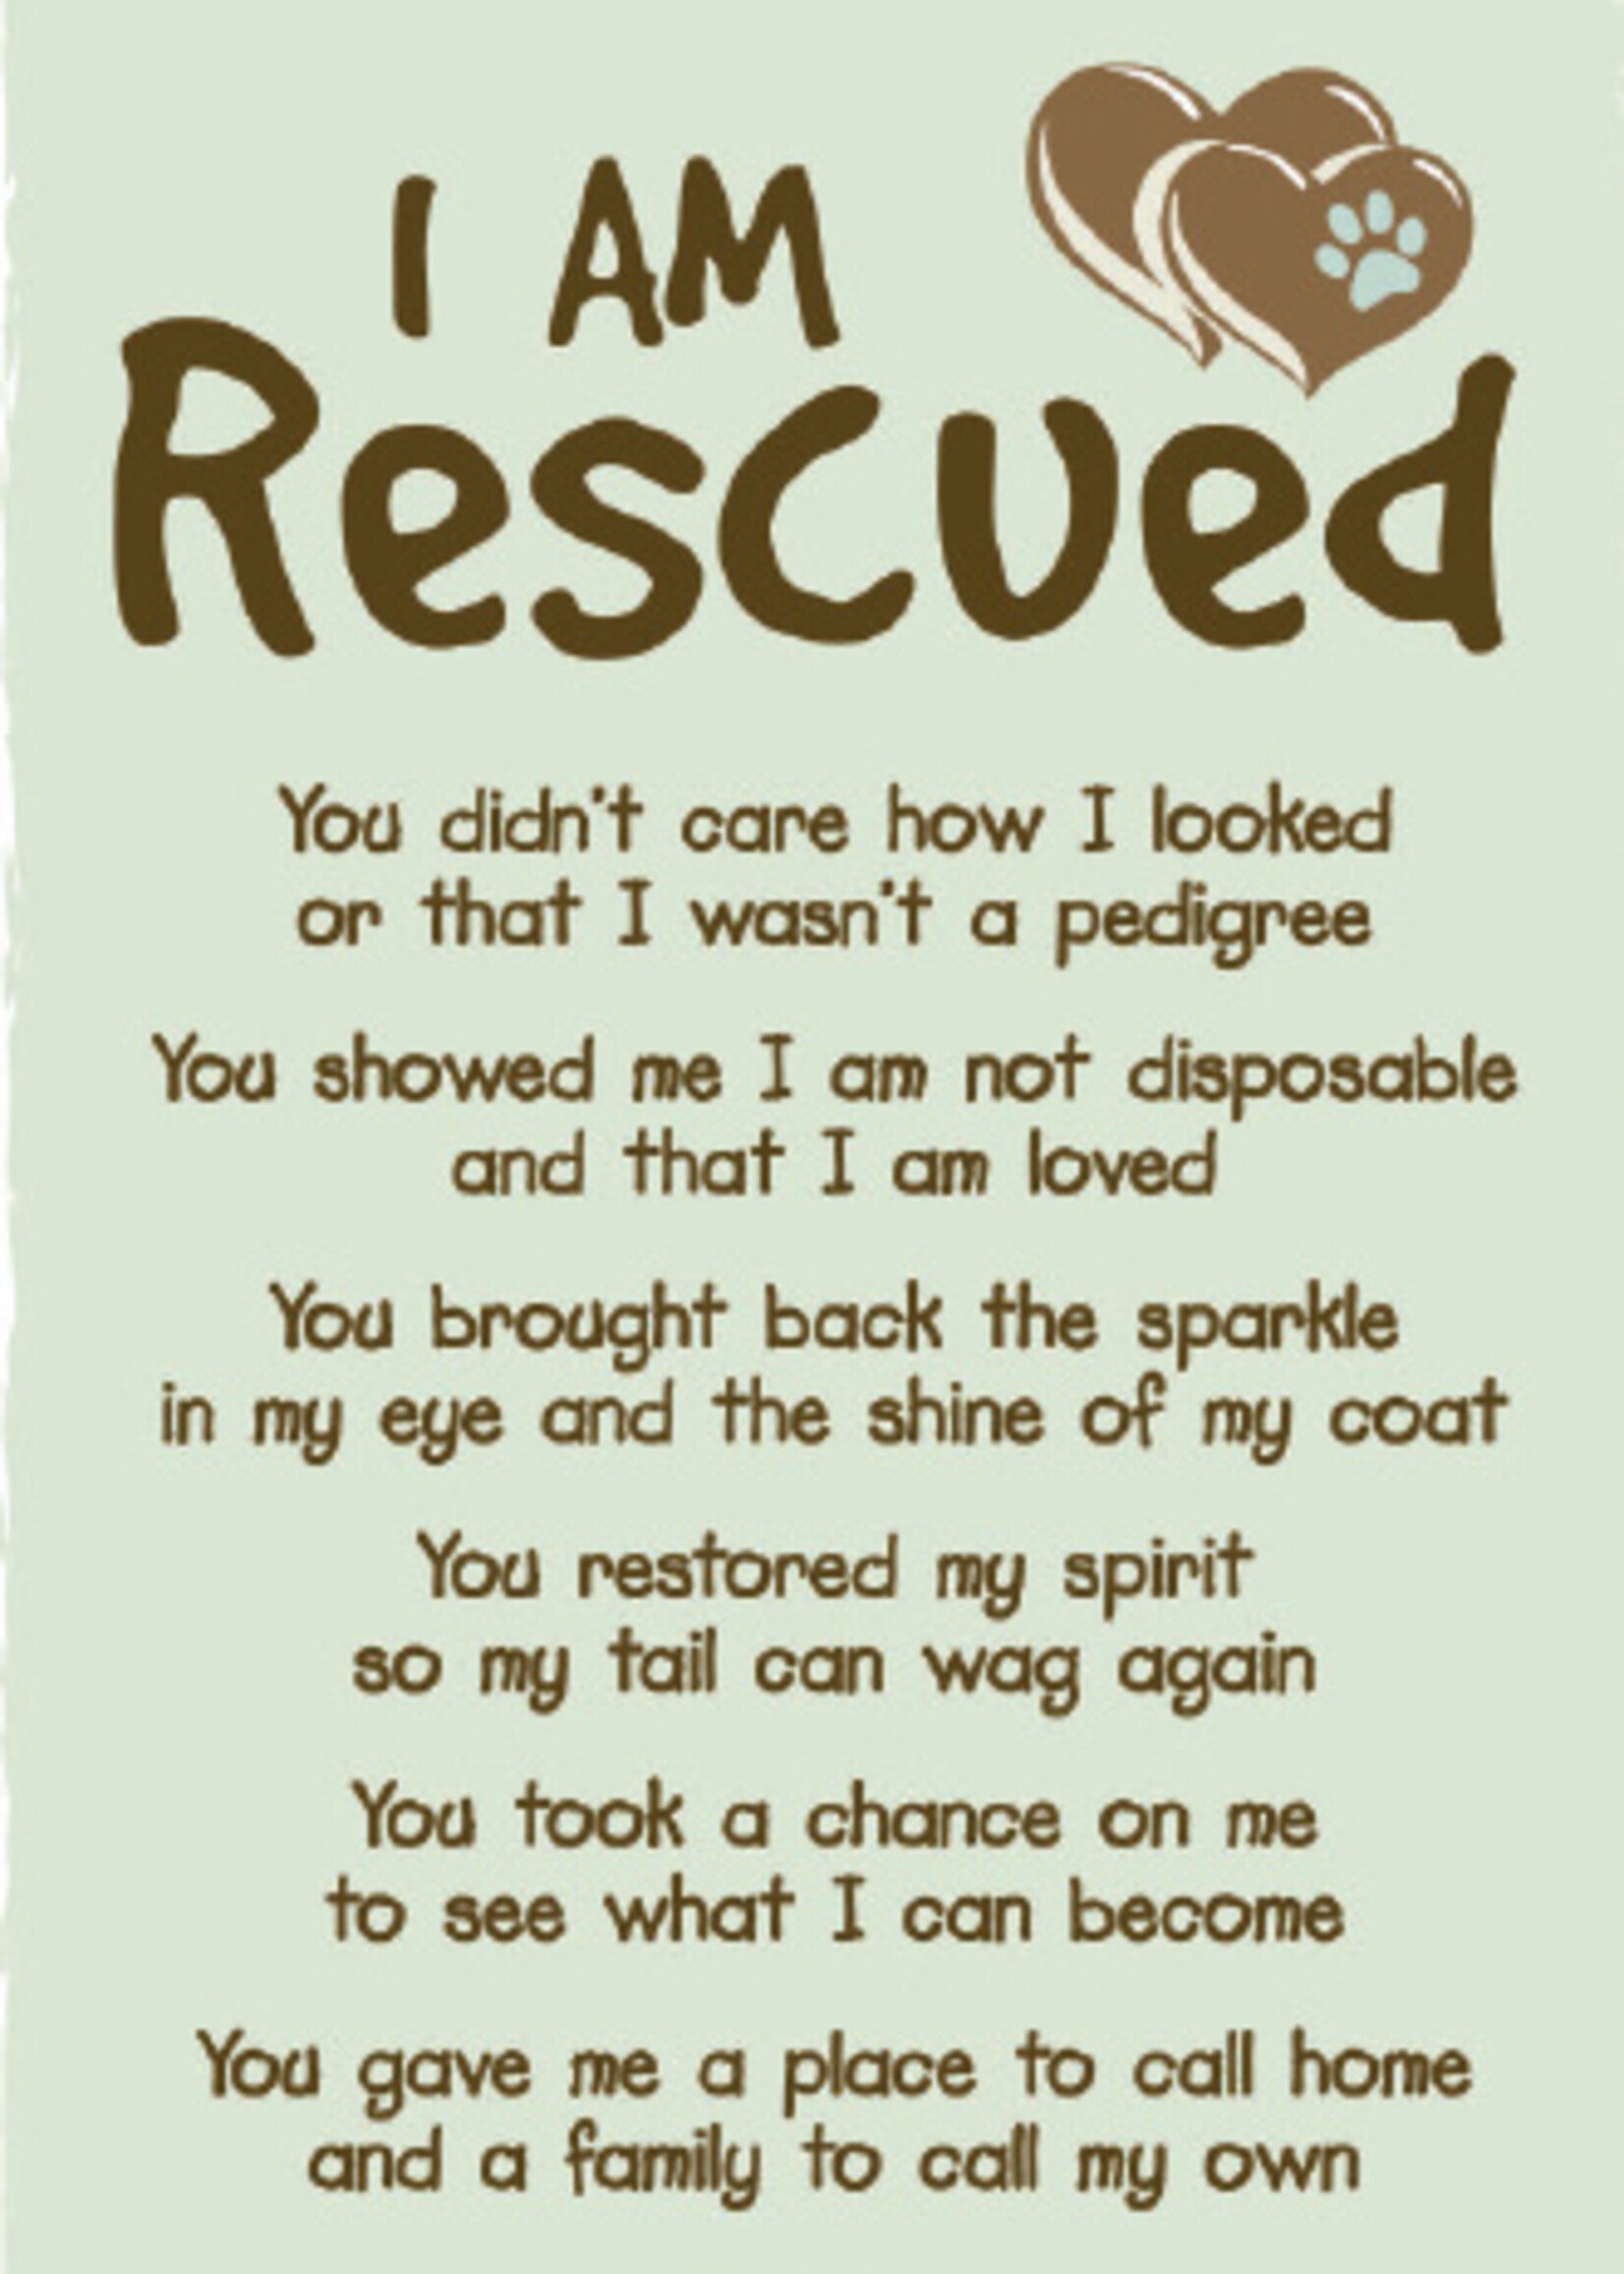 "I AM RESCUED" Dog Greeting Card